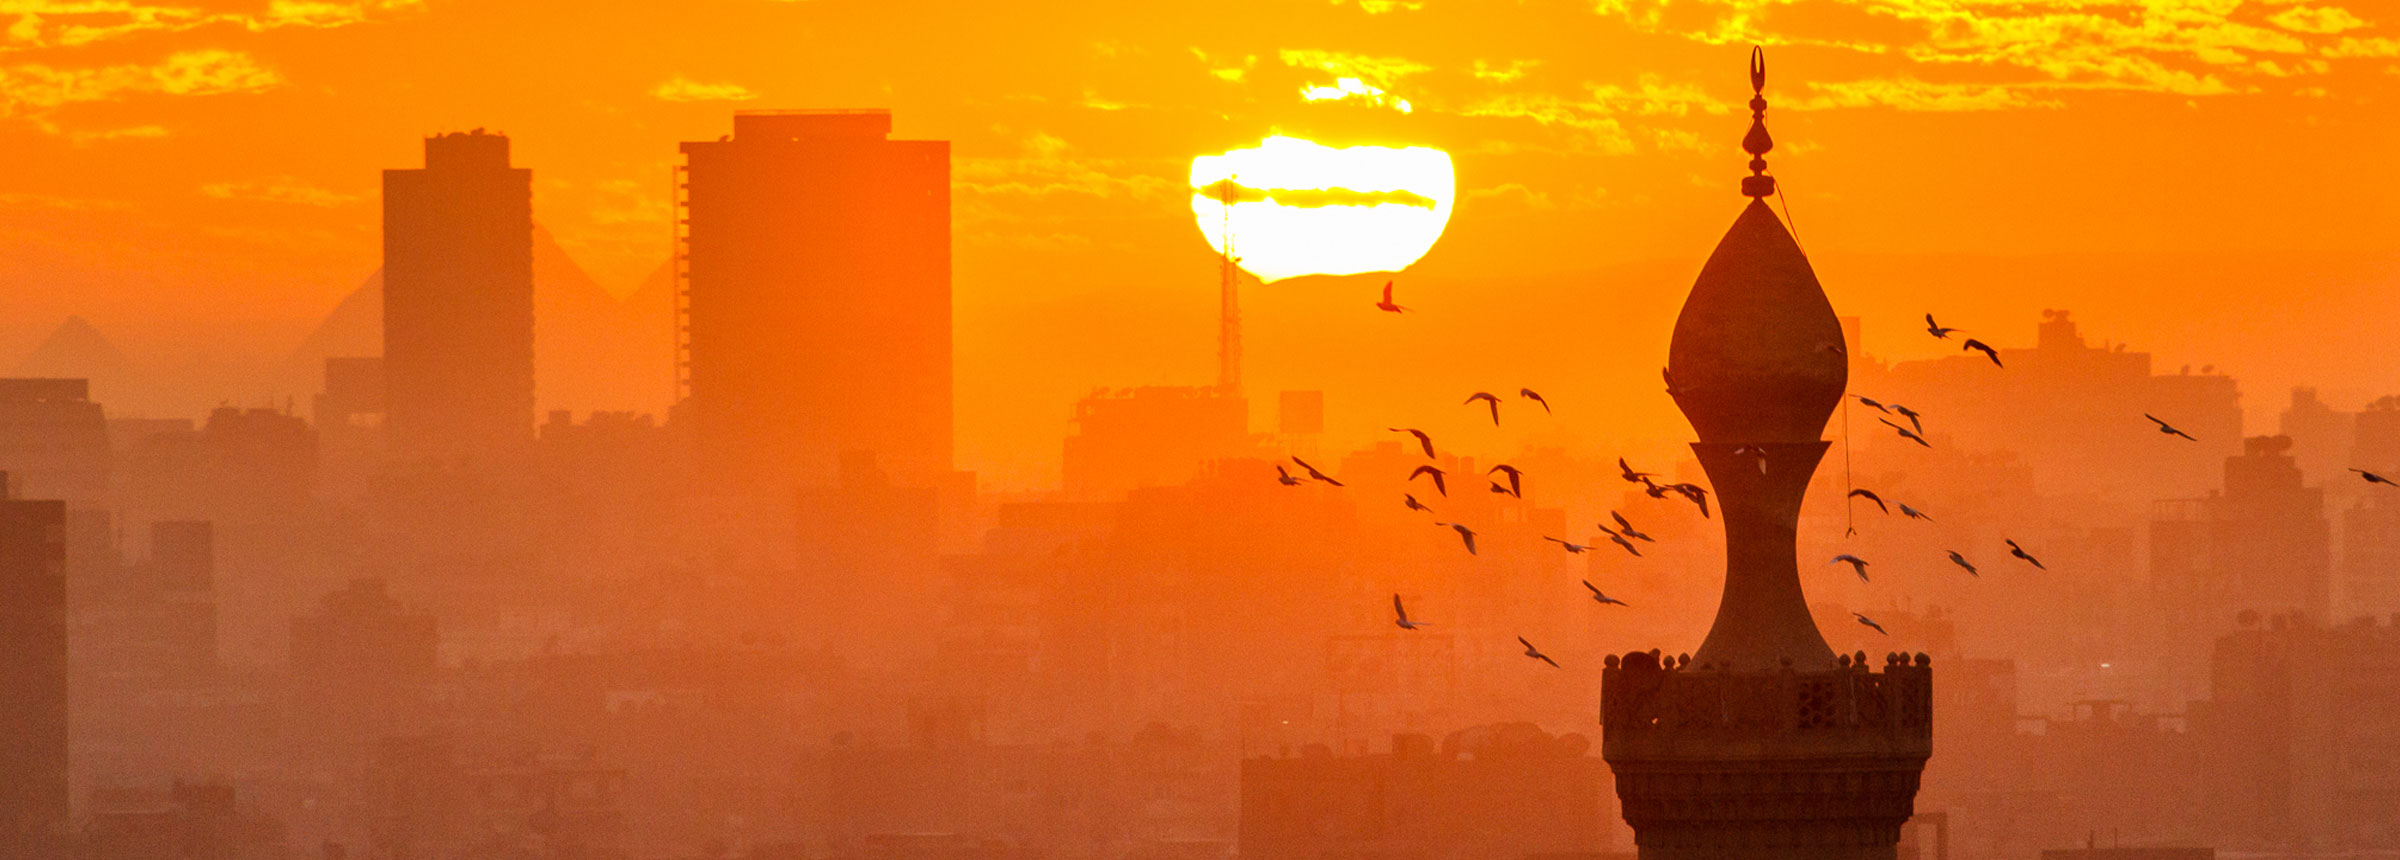 Cairo skyline at sunset